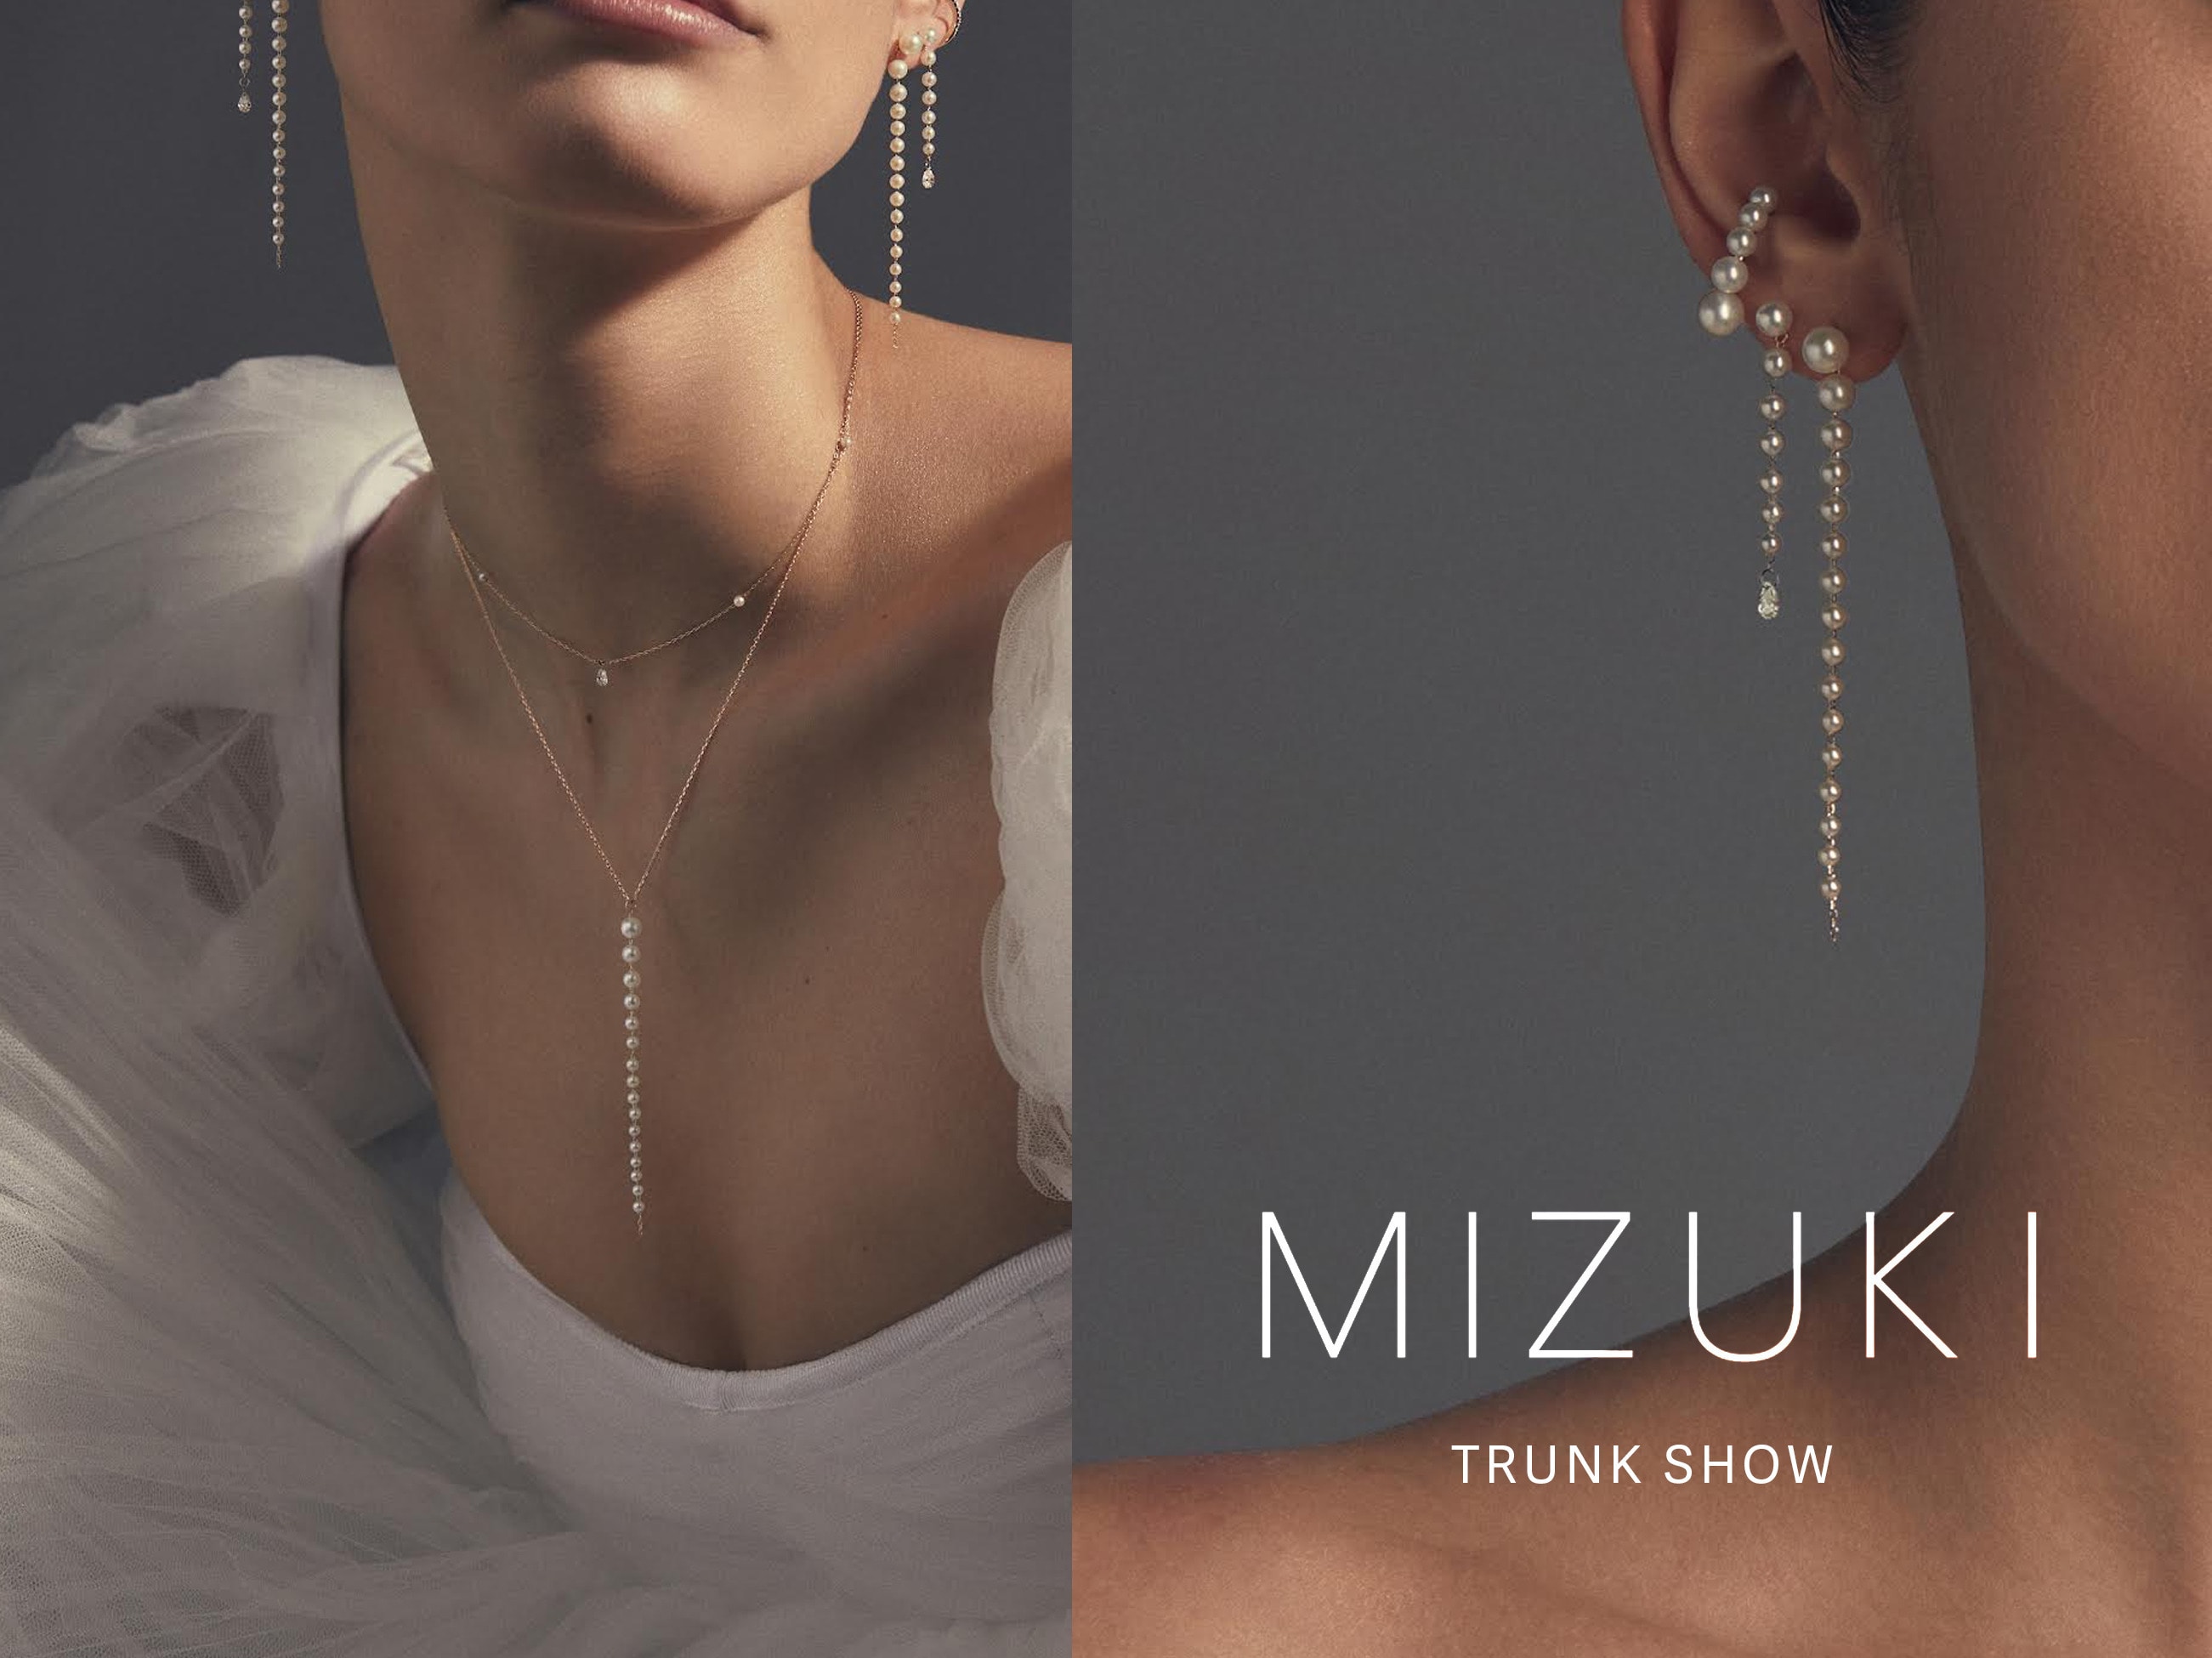 MIZUKI trunk show